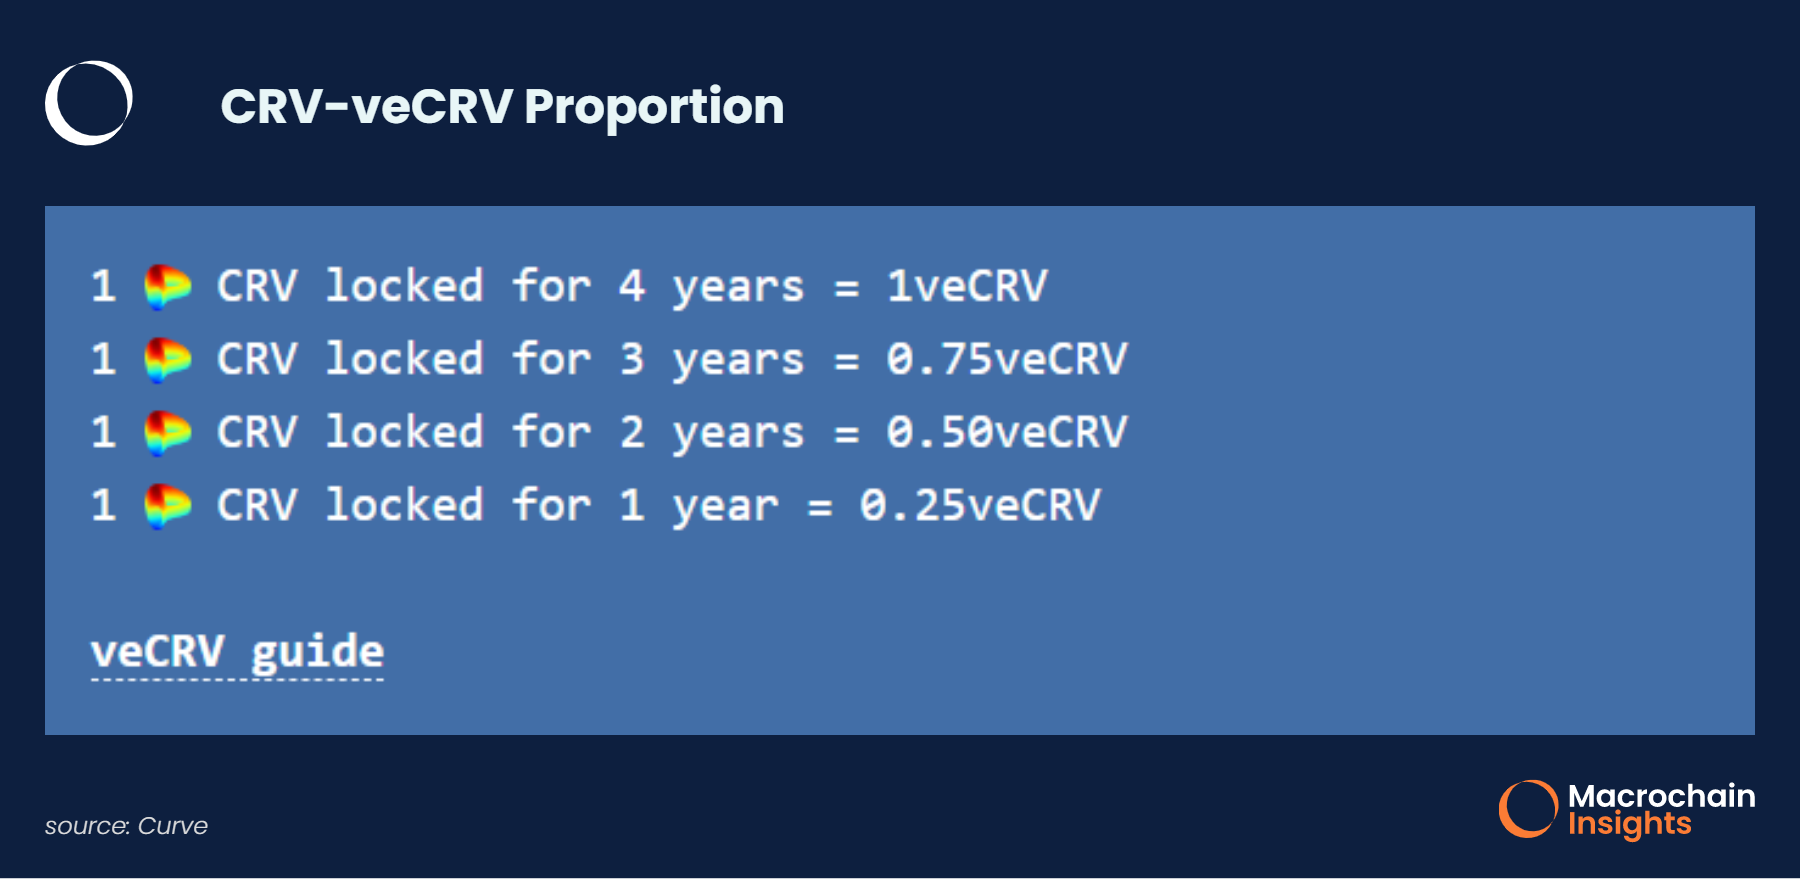 CRV-veCRV Proportion